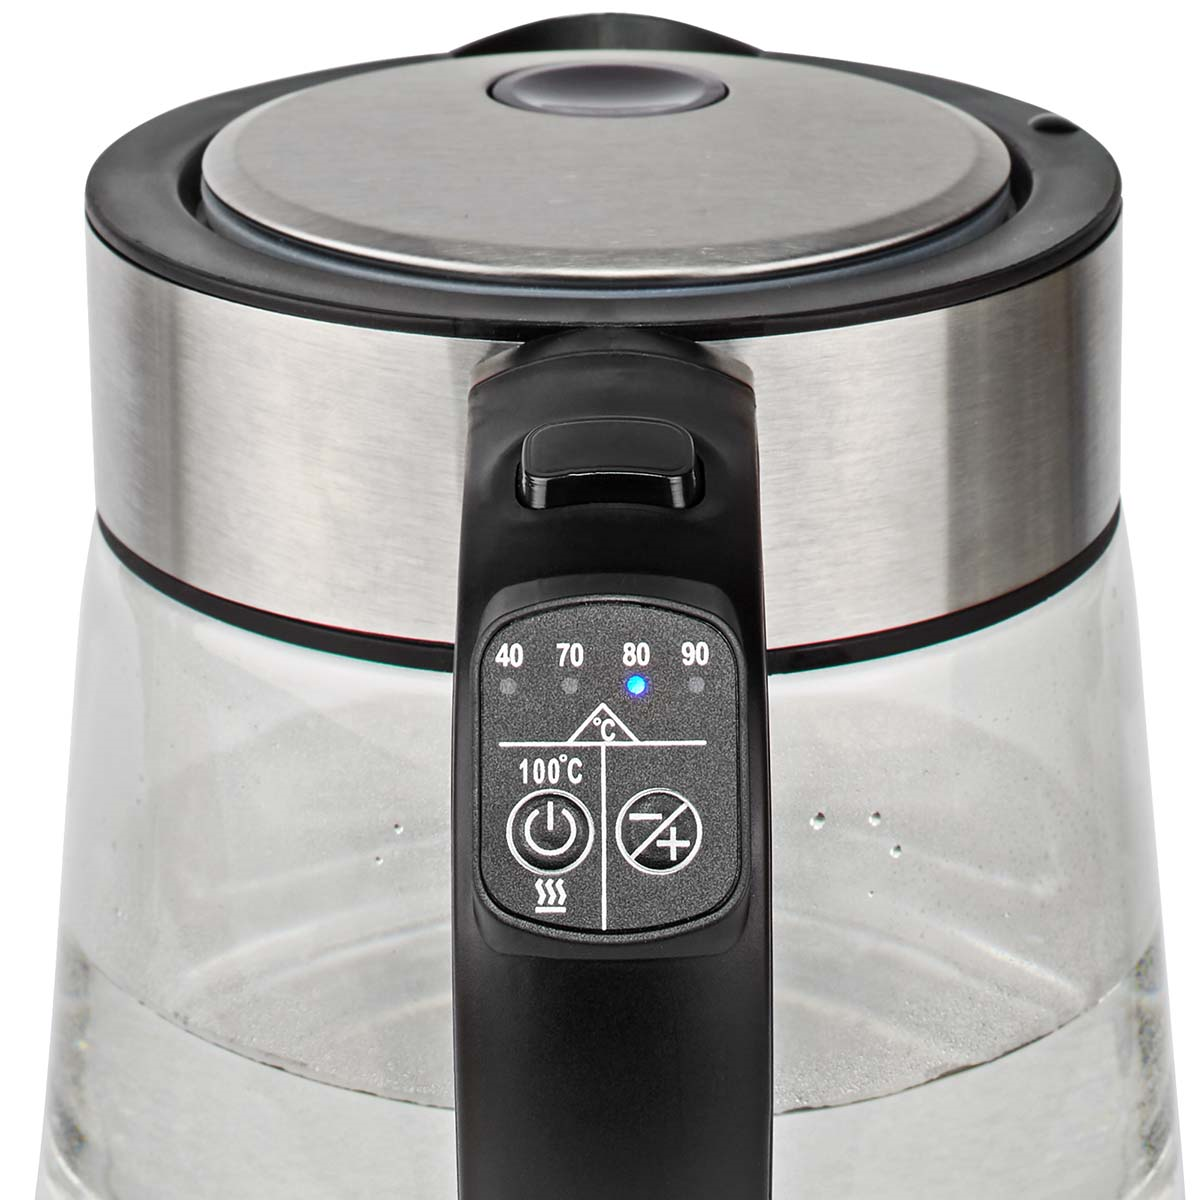 Nedis WIFIWK10CGS SmartLife Wasserkocher Wi-Fi  1.7 l | Glas | 40,60,70,80,90,100 °C | Temperaturanzeige